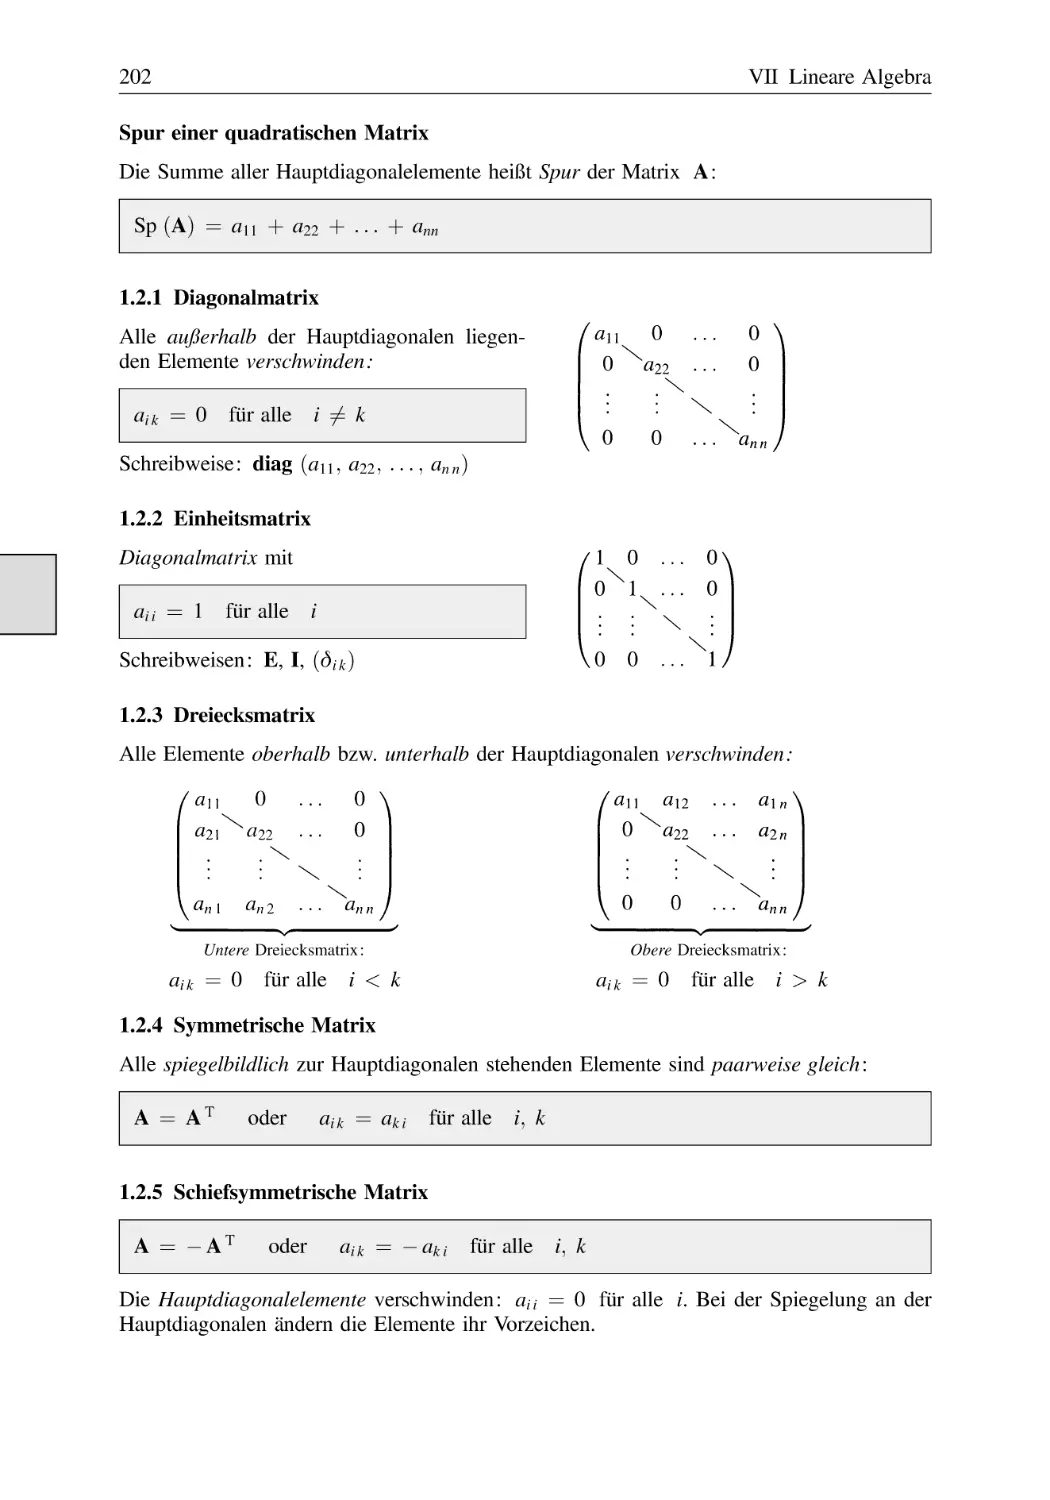 1.2.1 Diagonalmatrix
1.2.2 Einheitsmatrix
1.2.3 Dreiecksmatrix
1.2.4 Symmetrische Matrix
1.2.5 Schiefsymmetrische Matrix